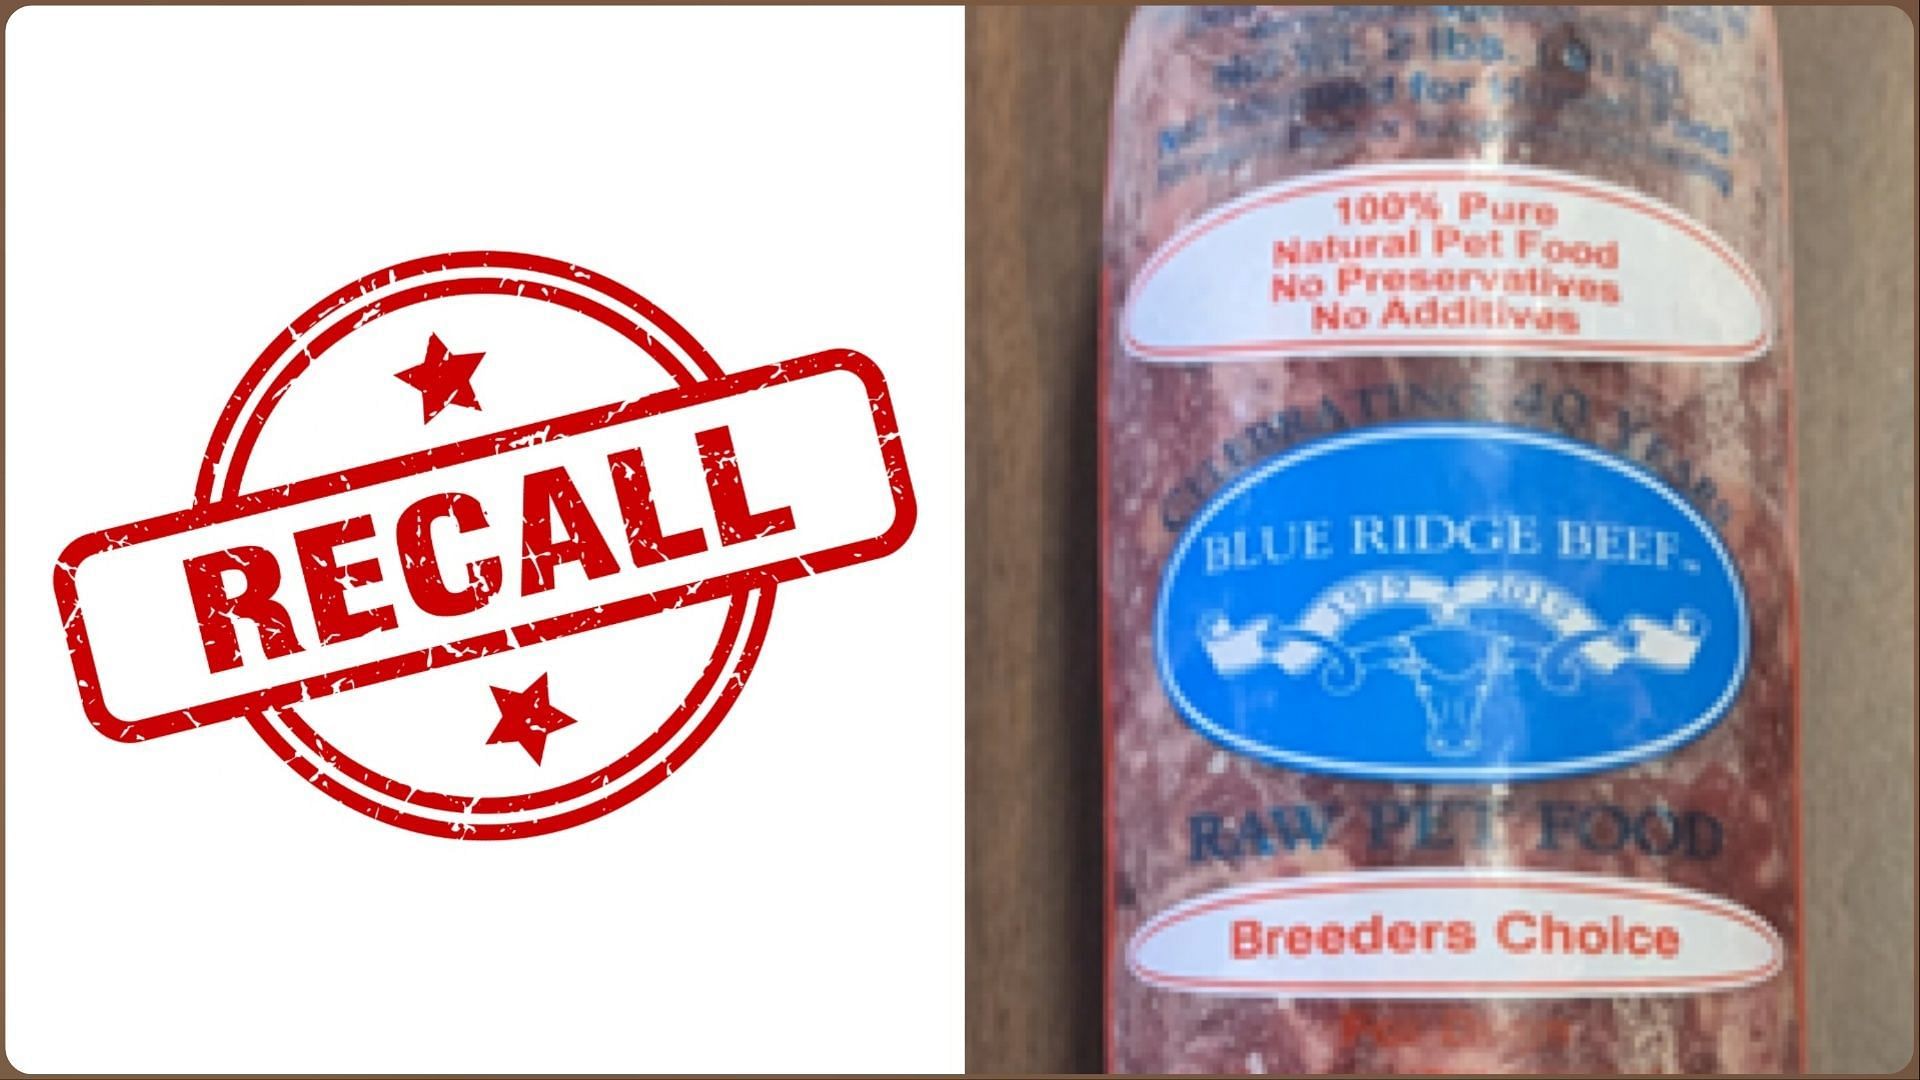 Blue Ridge Beef recalls Breeders Choice Dog Food over salmonella concerns (Image via FDA)